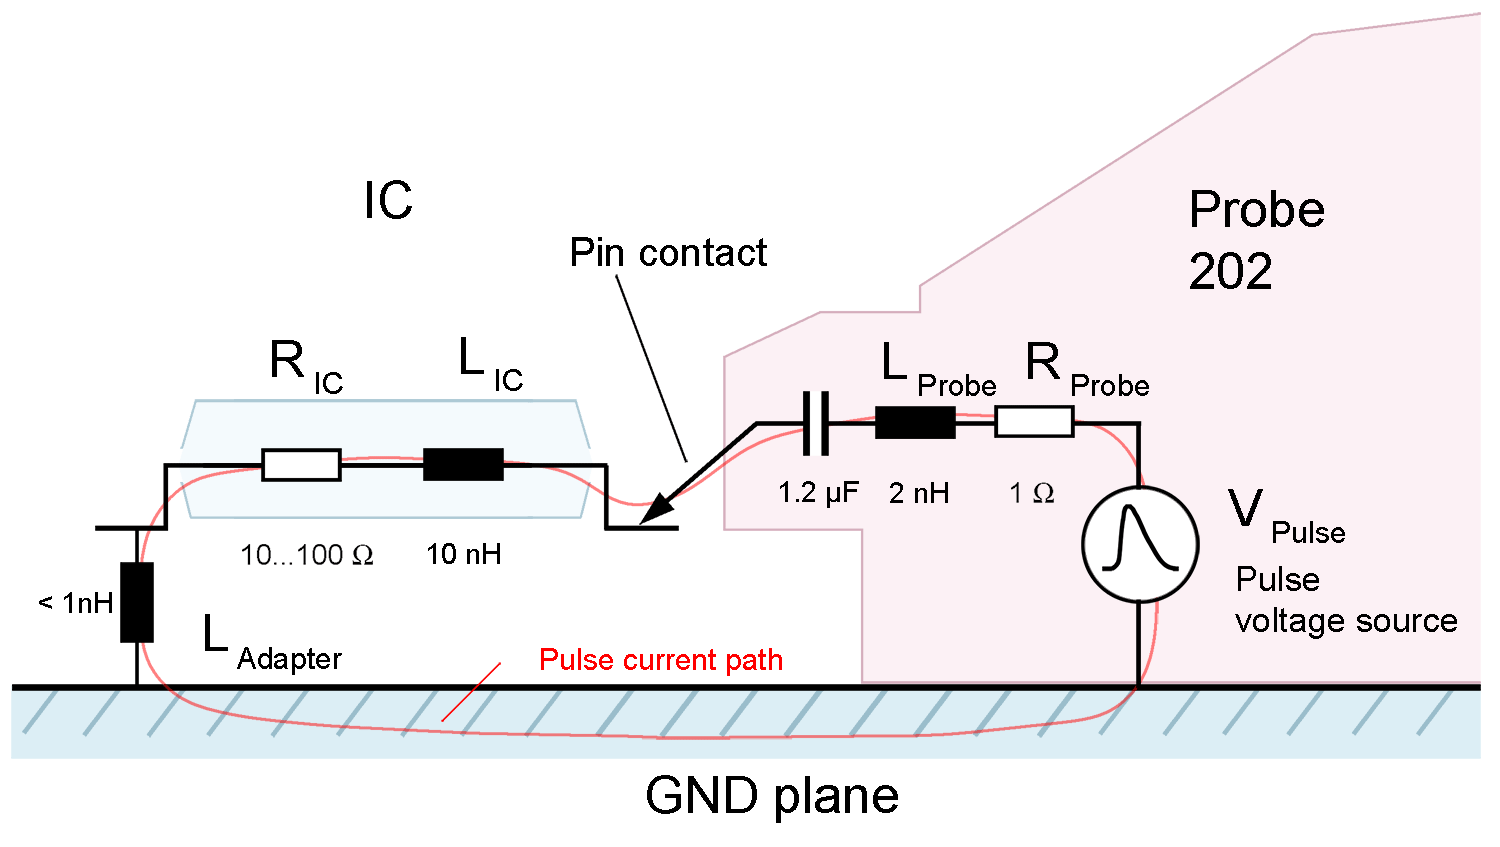 Pulse current path IC P202